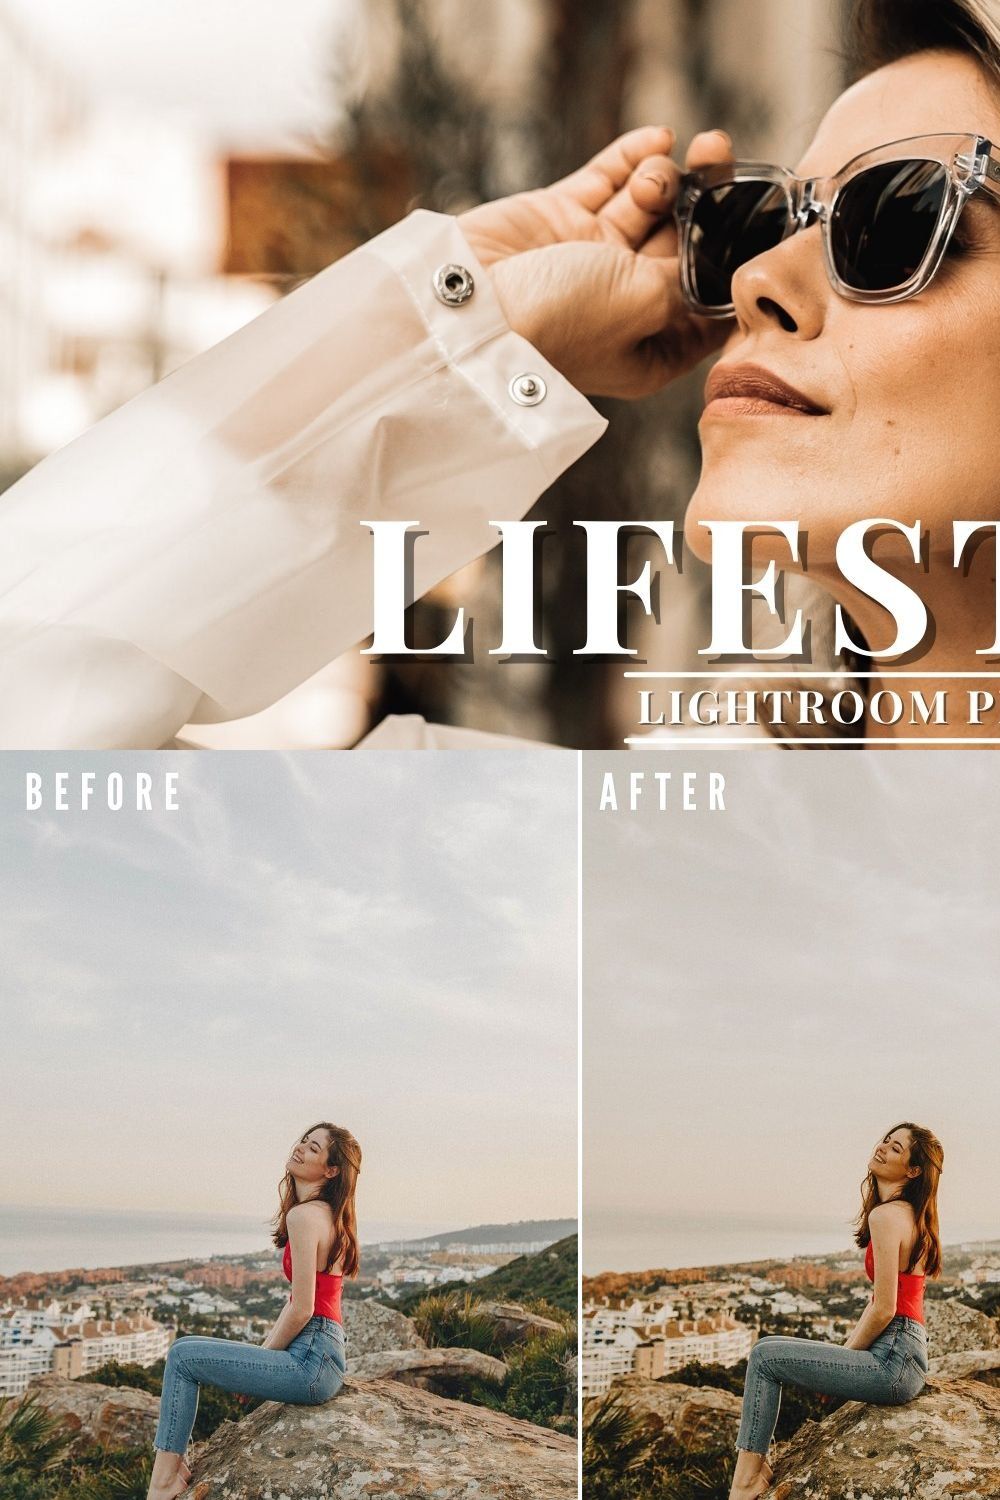 10 Lifestyle Lightroom Pesets pinterest preview image.